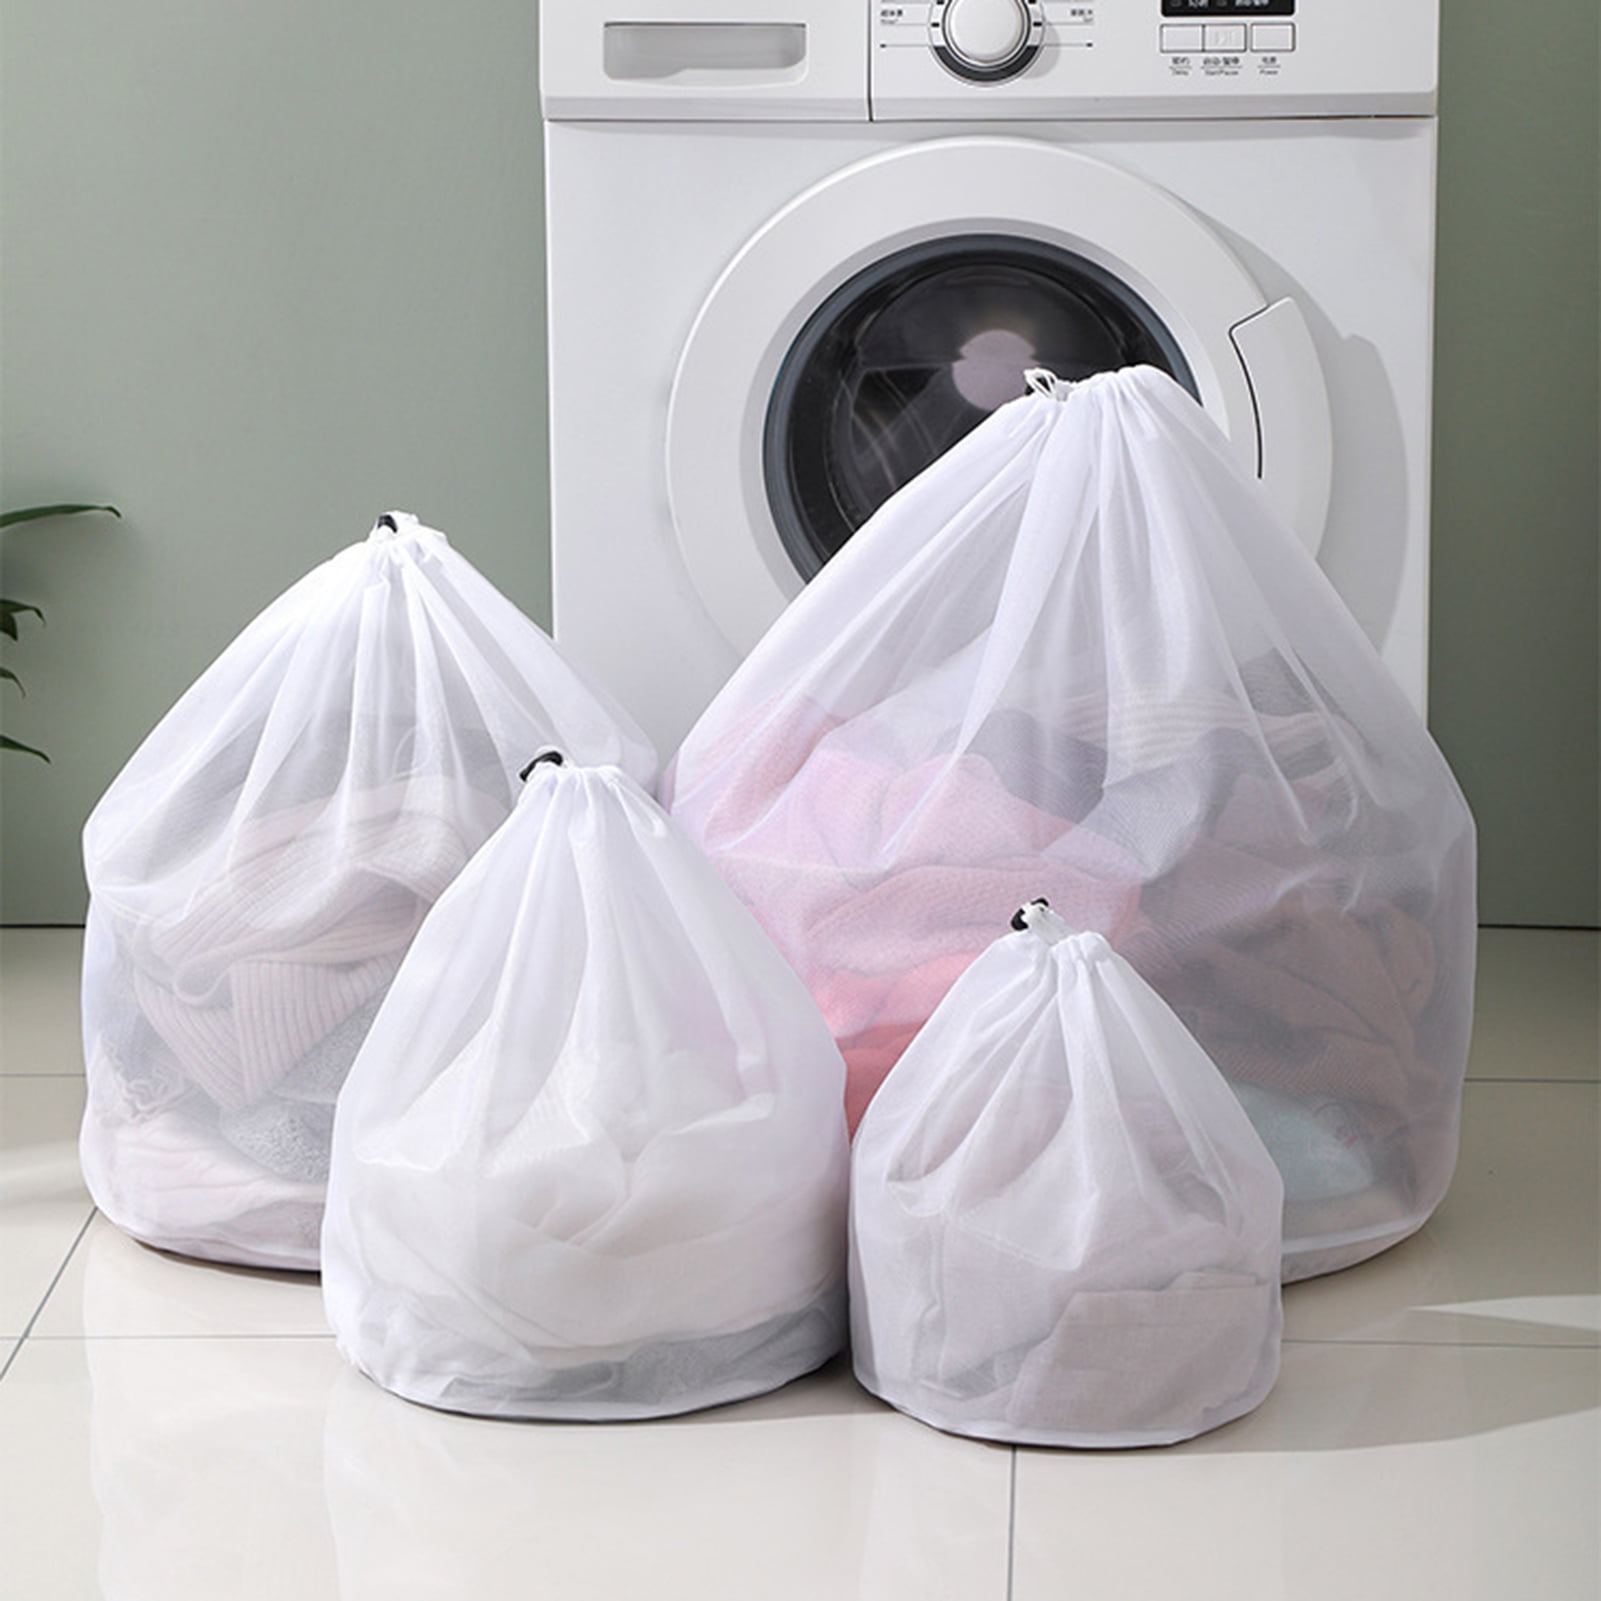 Washing Machine Mesh Net Bags Laundry Bag Large Thickened Wash